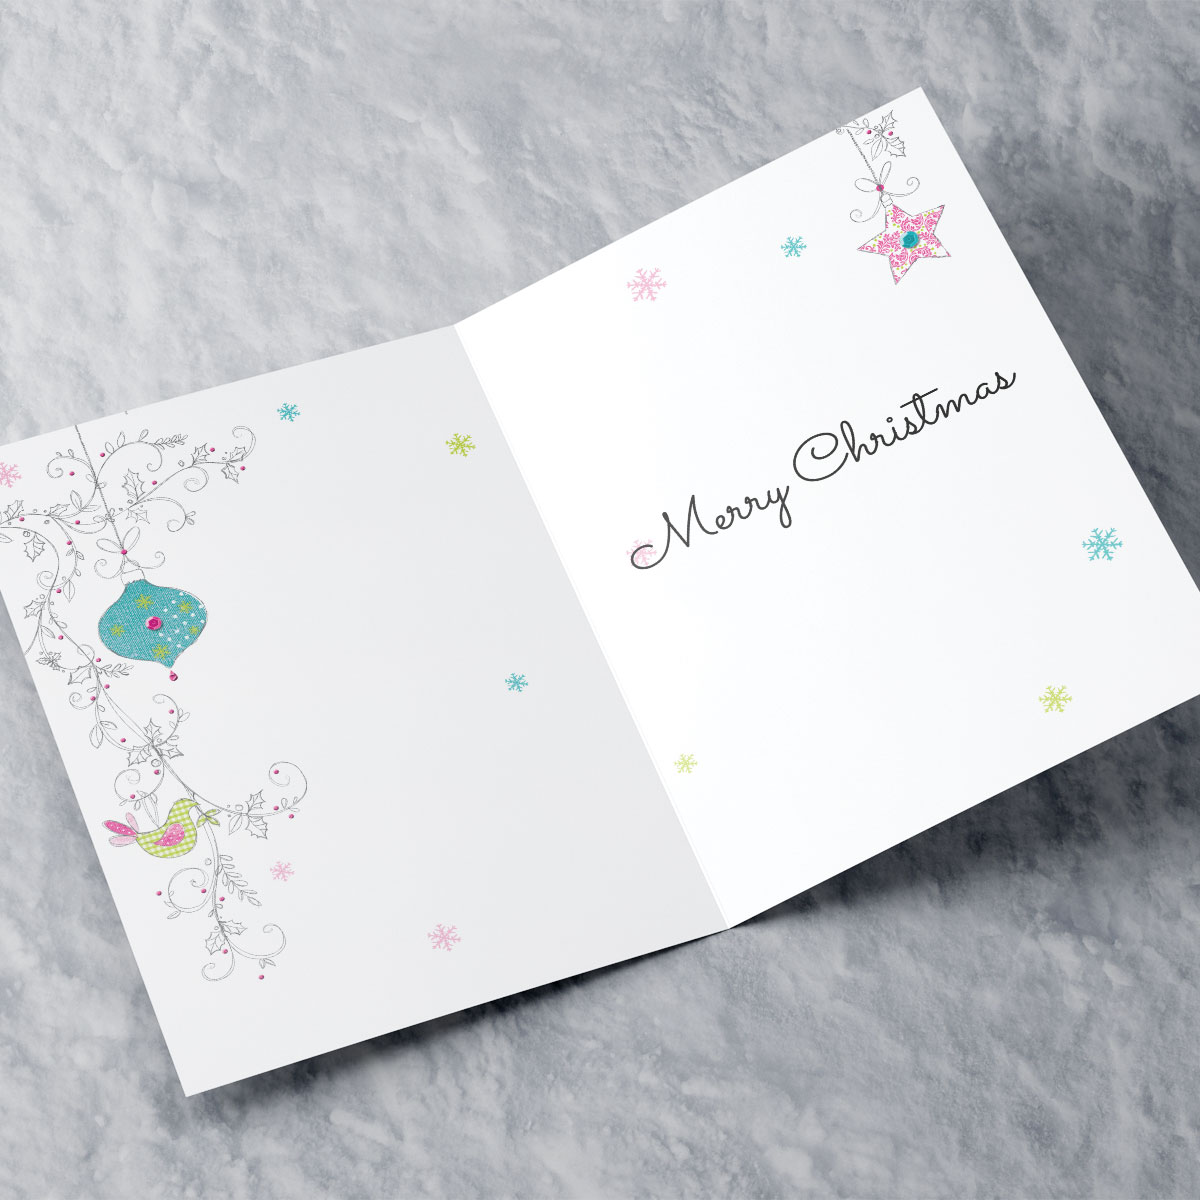 Personalised Christmas Card - Bauble Print